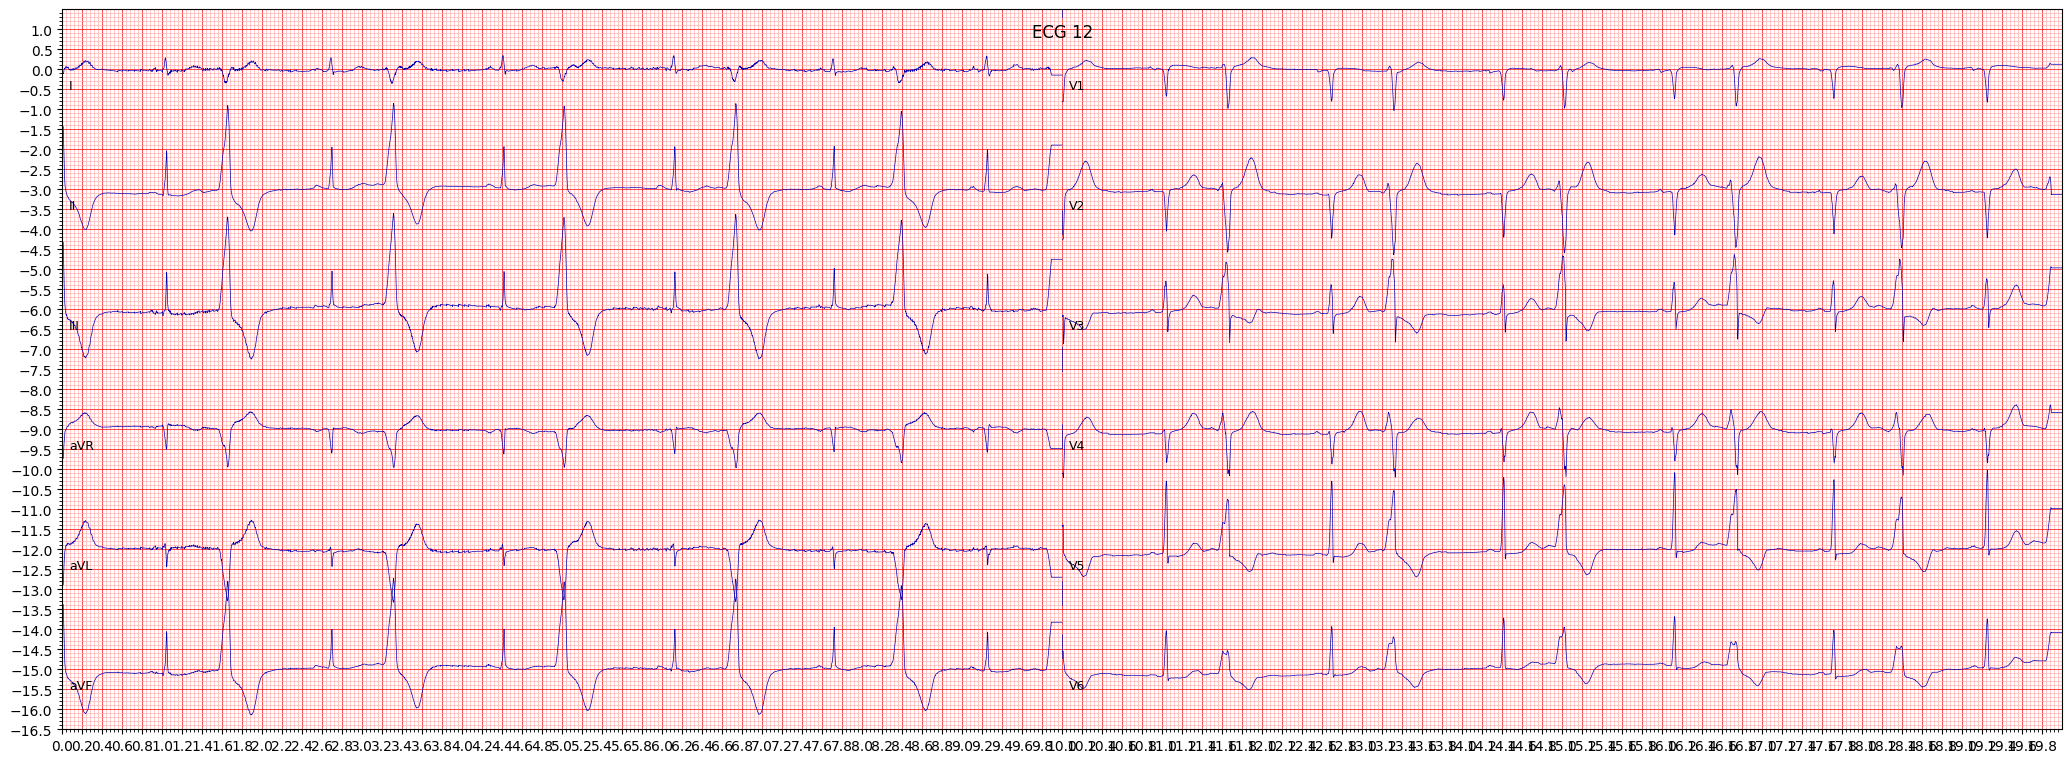 anteroseptal myocardial infarction (ASMI) example 2184